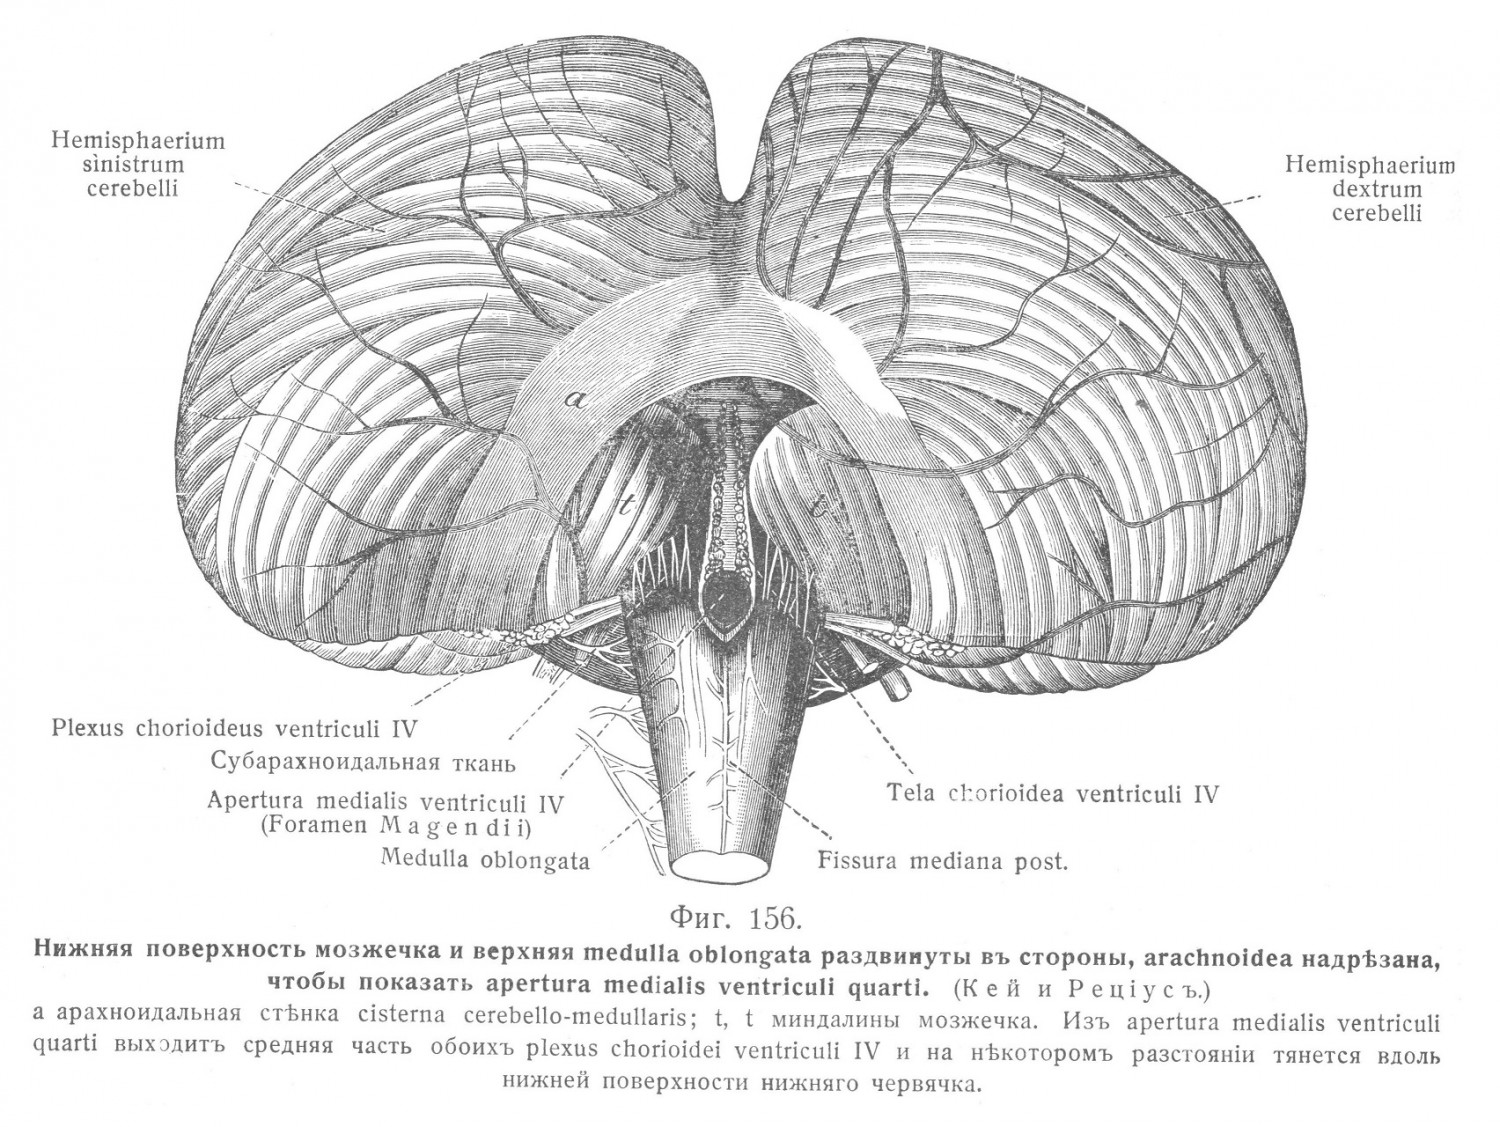 Tela chorioidea ventriculi quarti